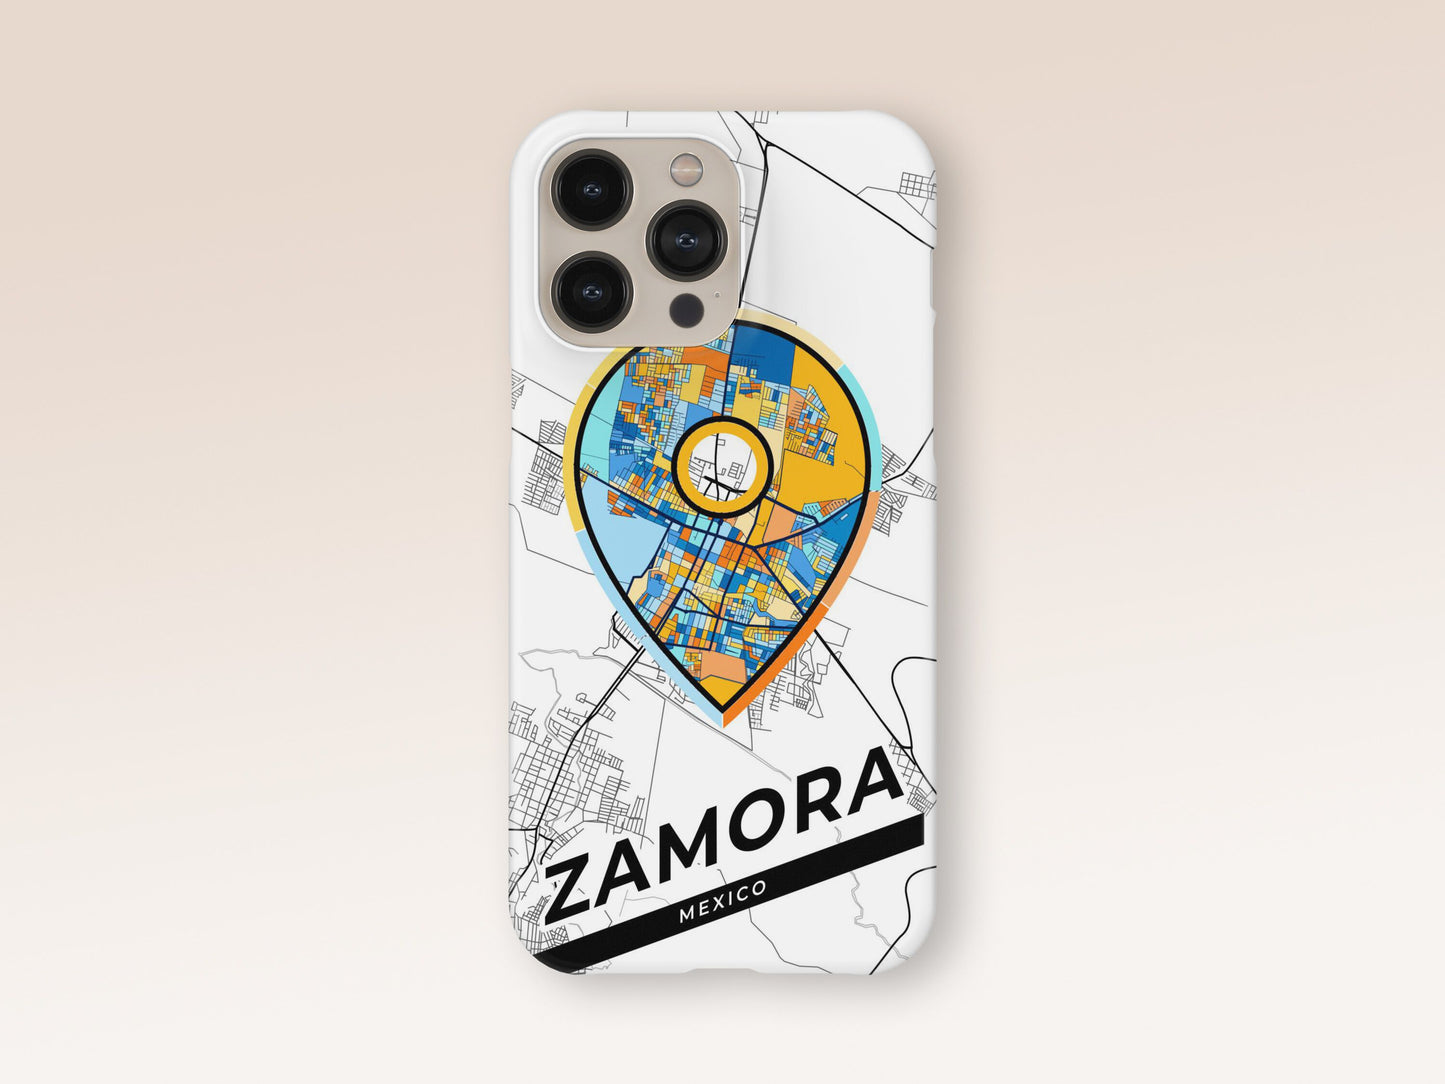 Zamora Mexico slim phone case with colorful icon 1